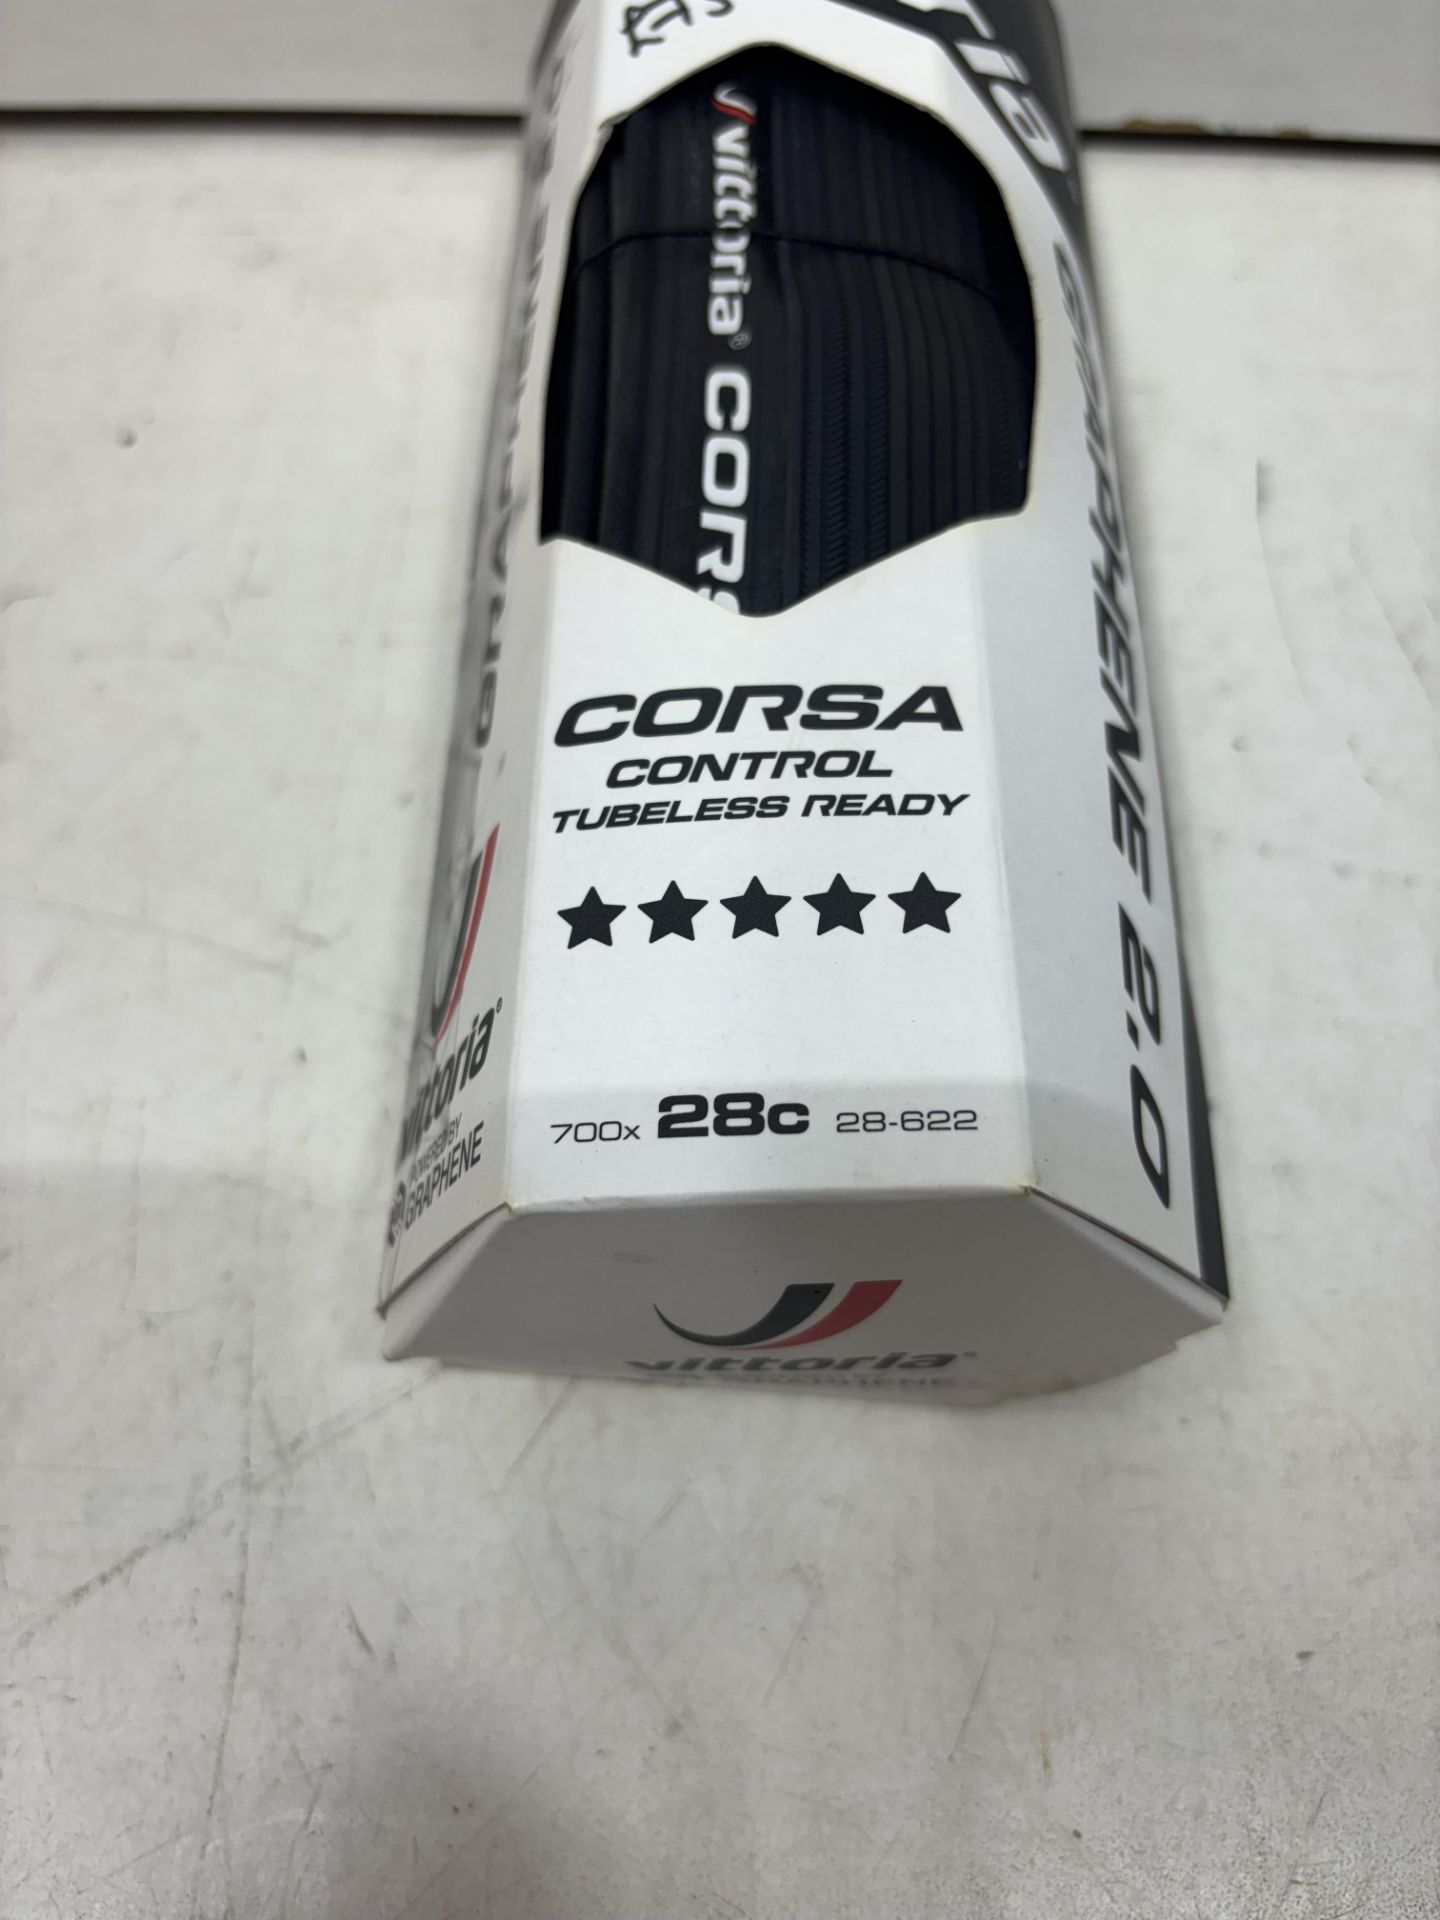 Vittoria Corsa Control 700x28c G2.0 Tubeless Tire, Black - Image 3 of 4